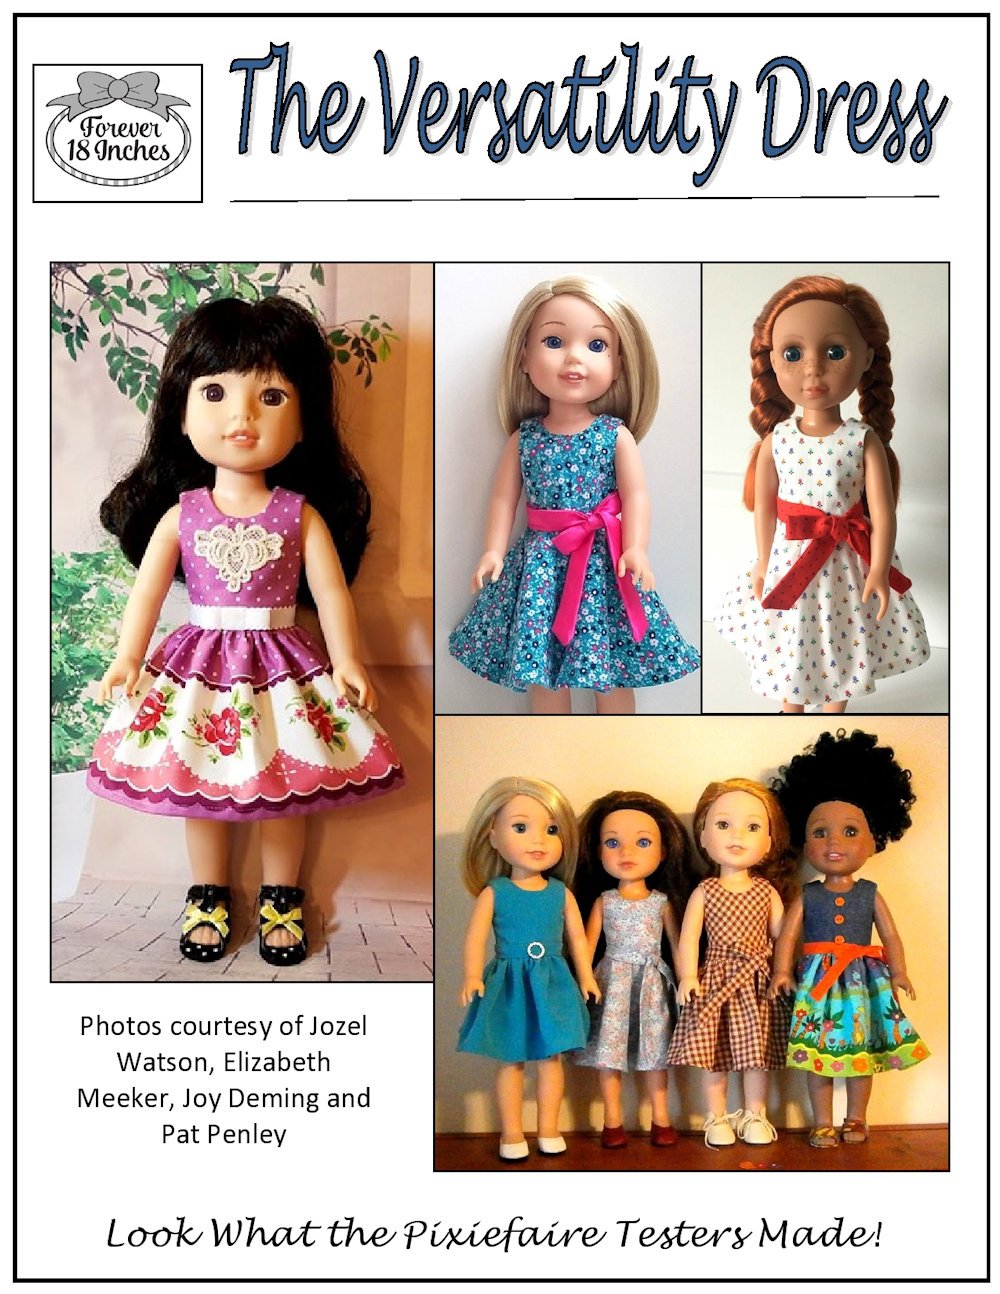 5 Surprise Mini Fashions--Deluxe Fashion Accessories For Barbies! — Pixie  Dust Dolls